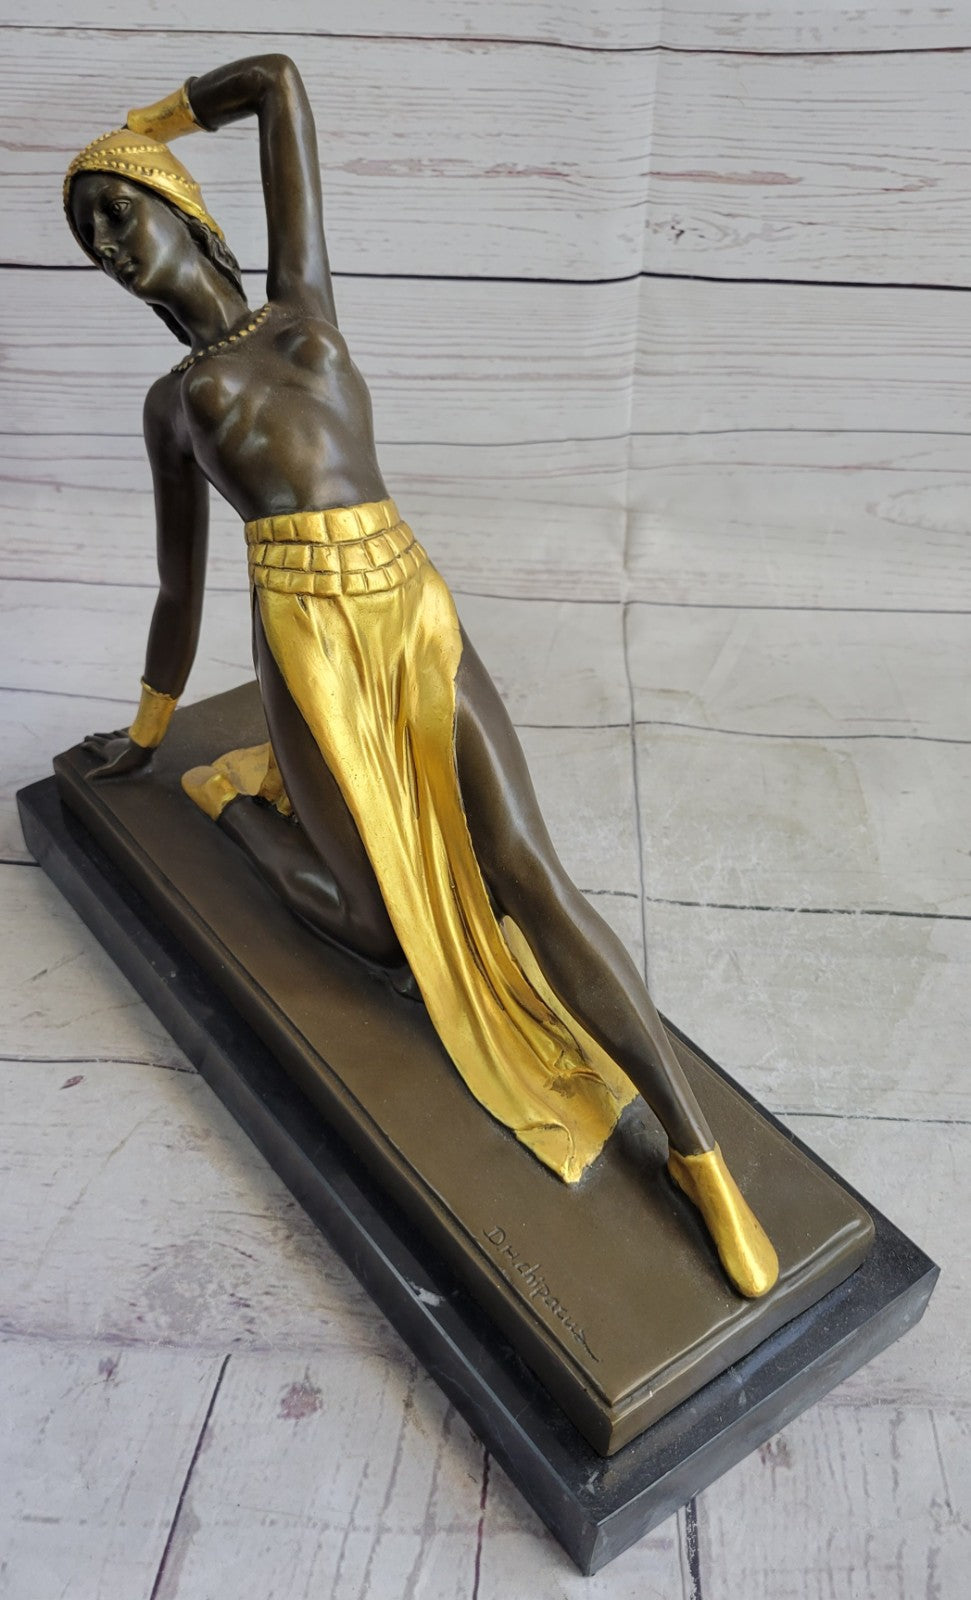 Handcrafted bronze sculpture SALE Deco Art Dancer Exotic Chiparus Signed